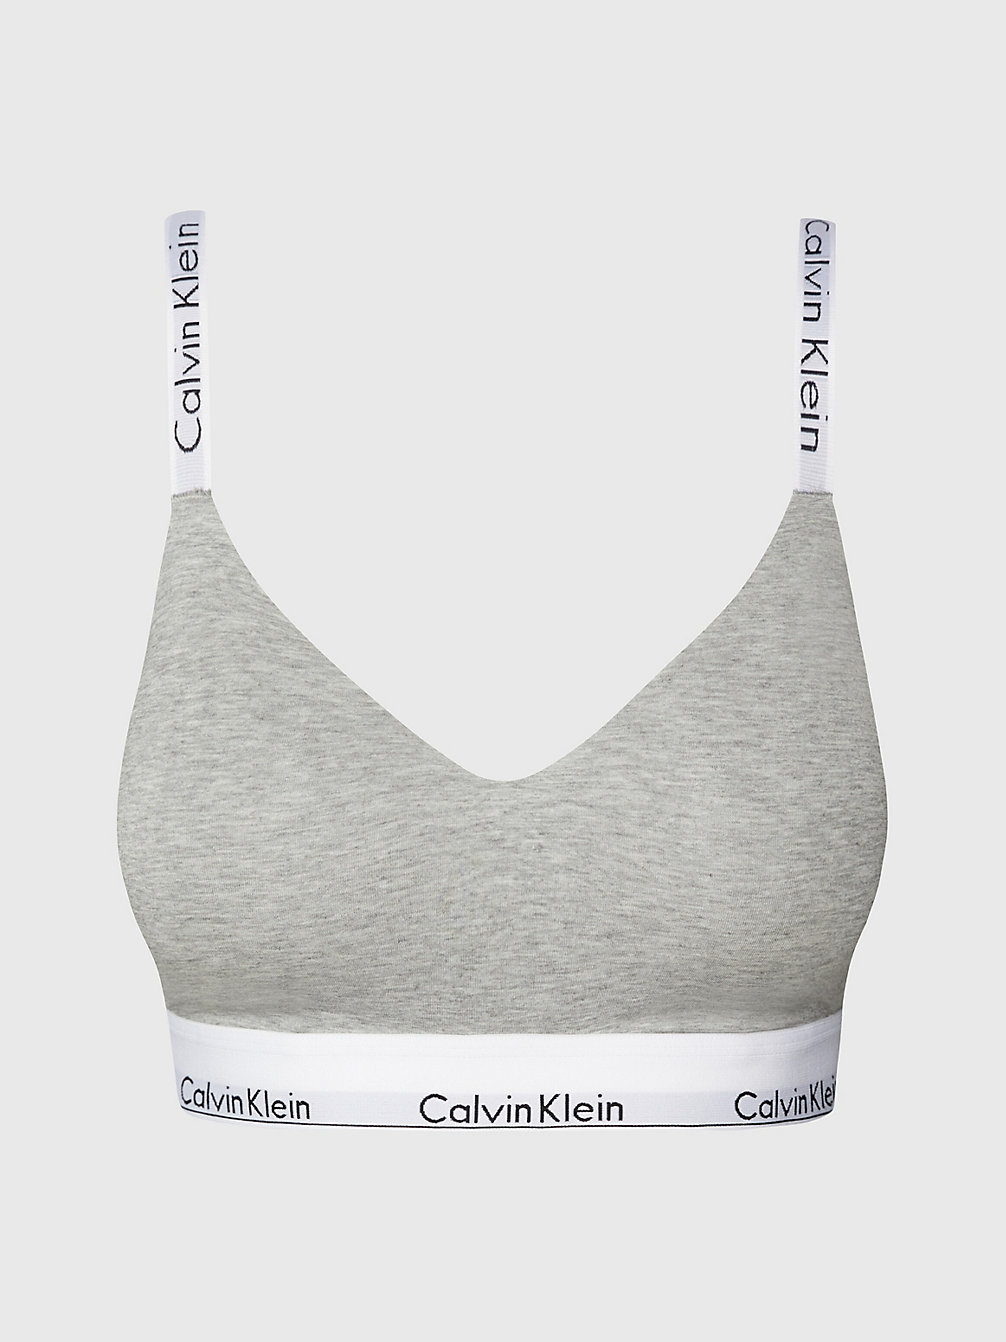 GREY HEATHER > Biustonosz Typu Bralette Z Pełnymi Miseczkami - Modern Cotton > undefined Kobiety - Calvin Klein